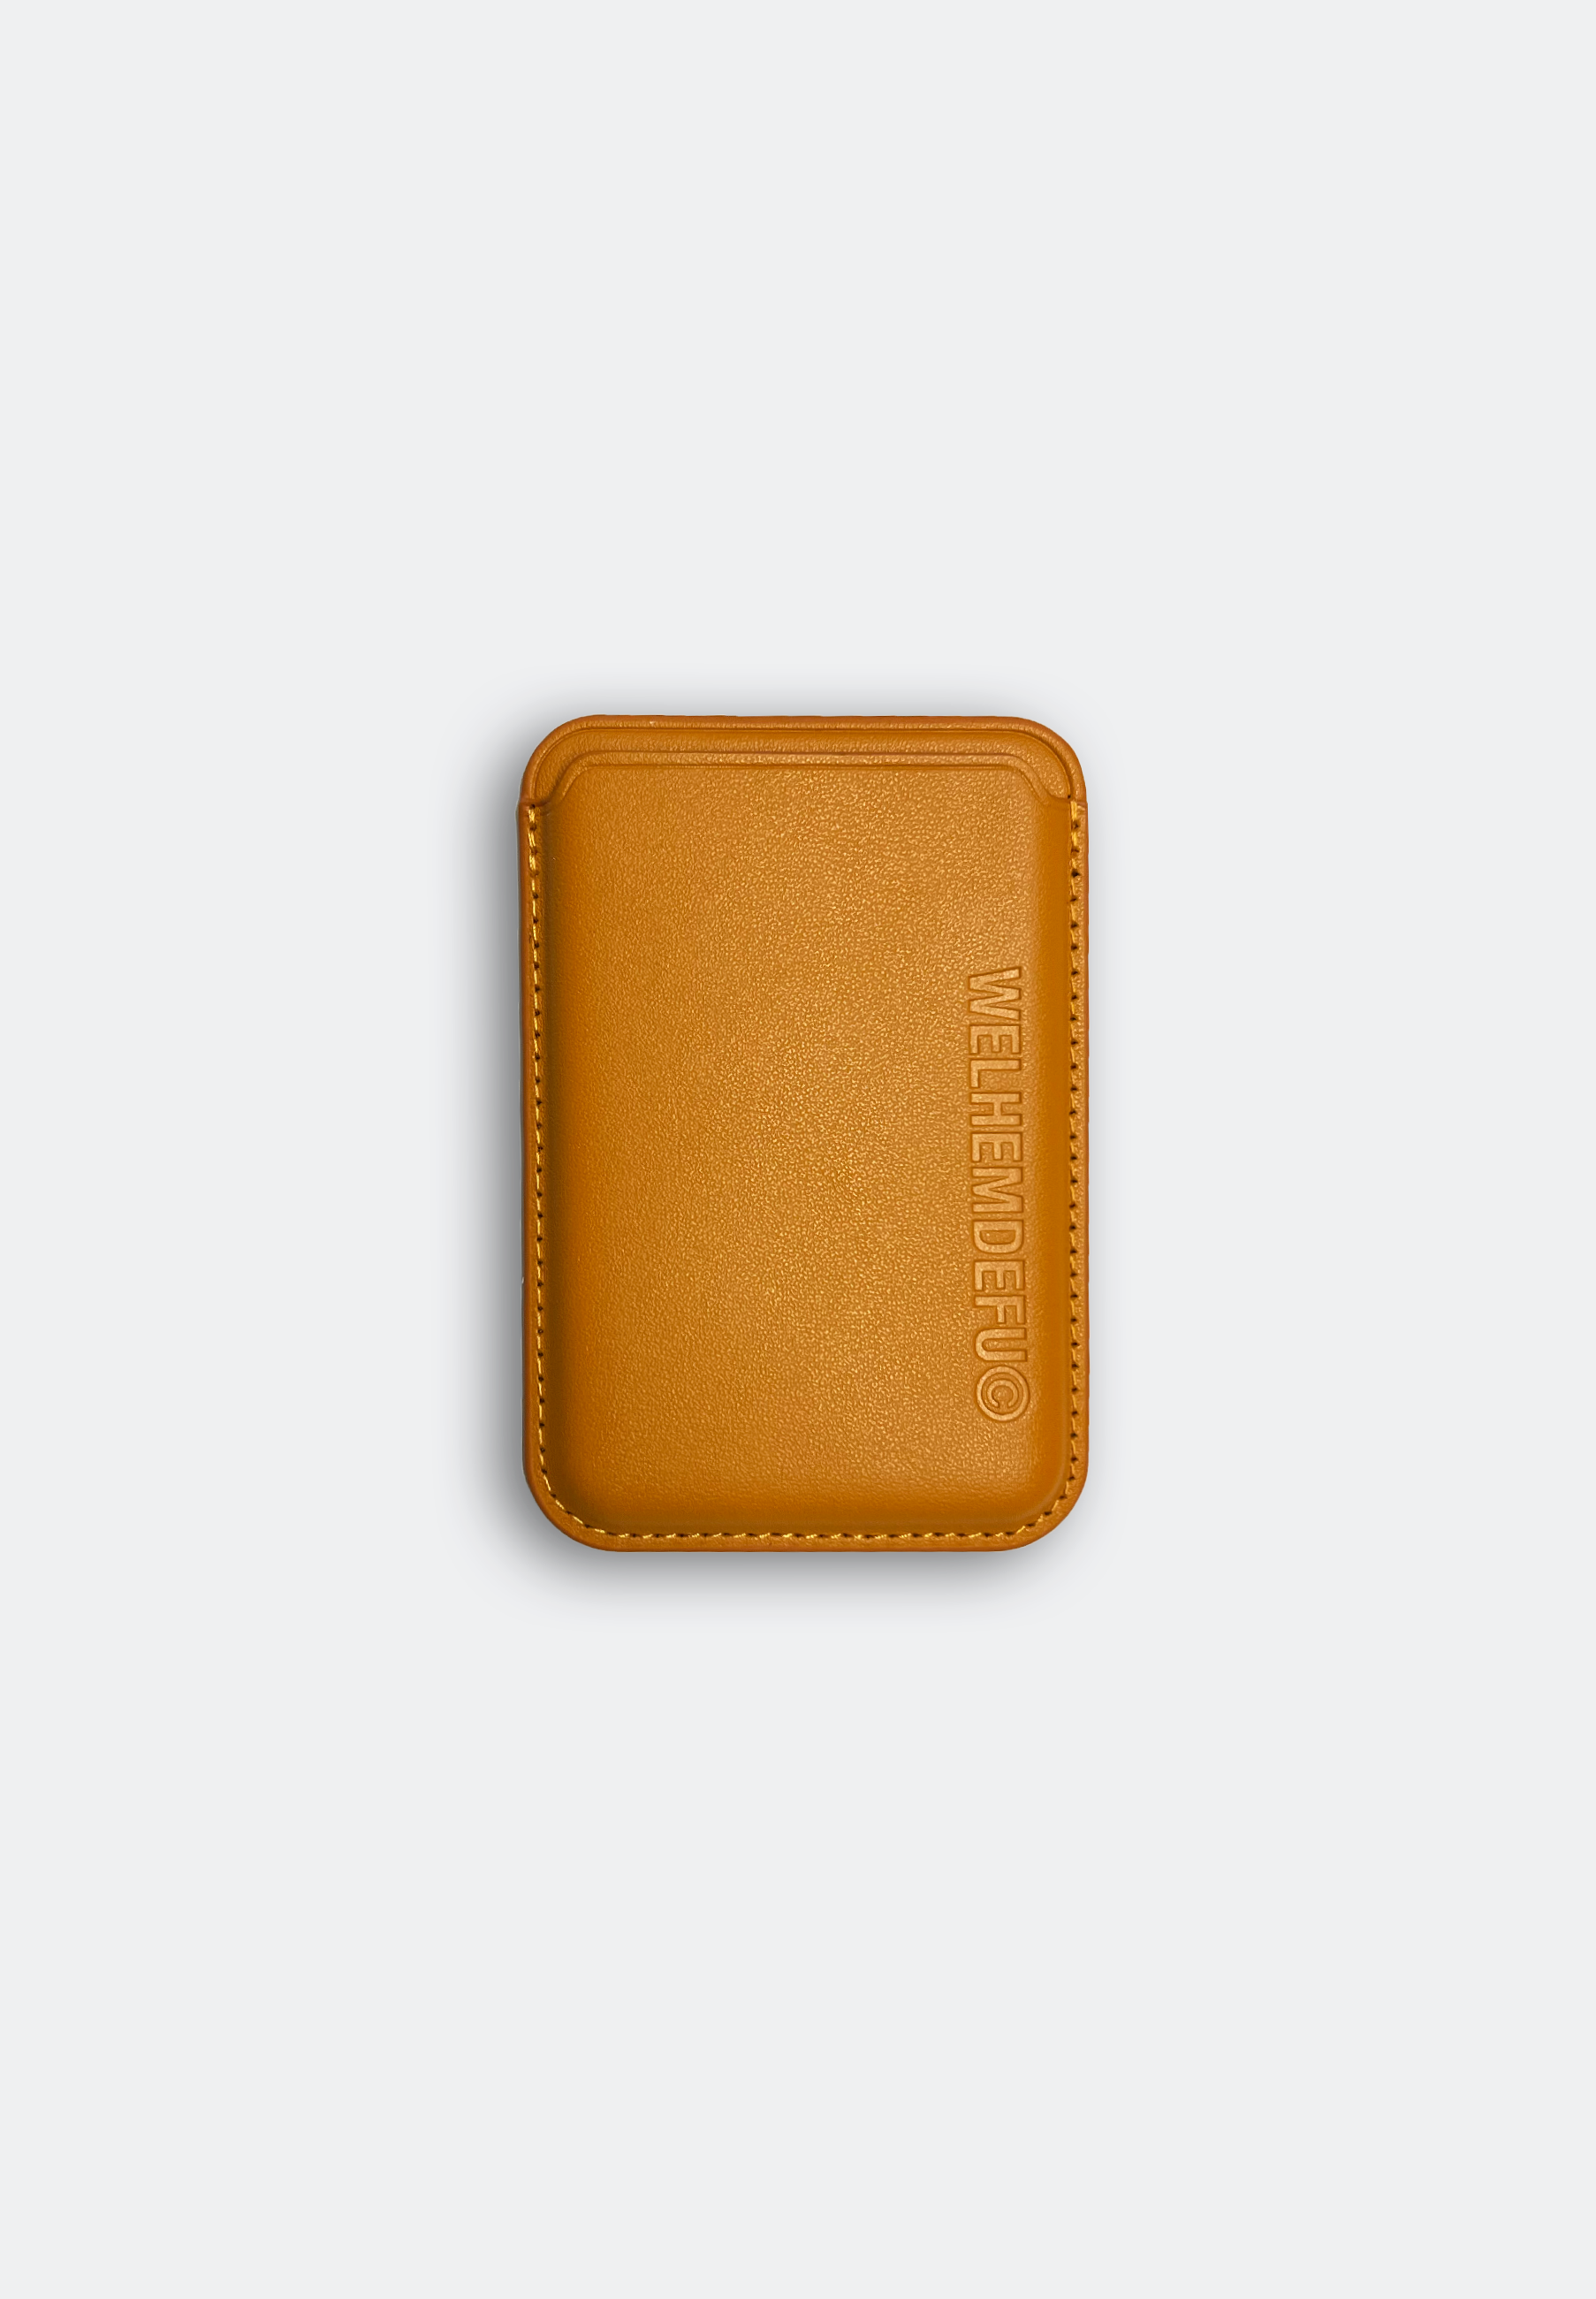 MagSafe Wallet